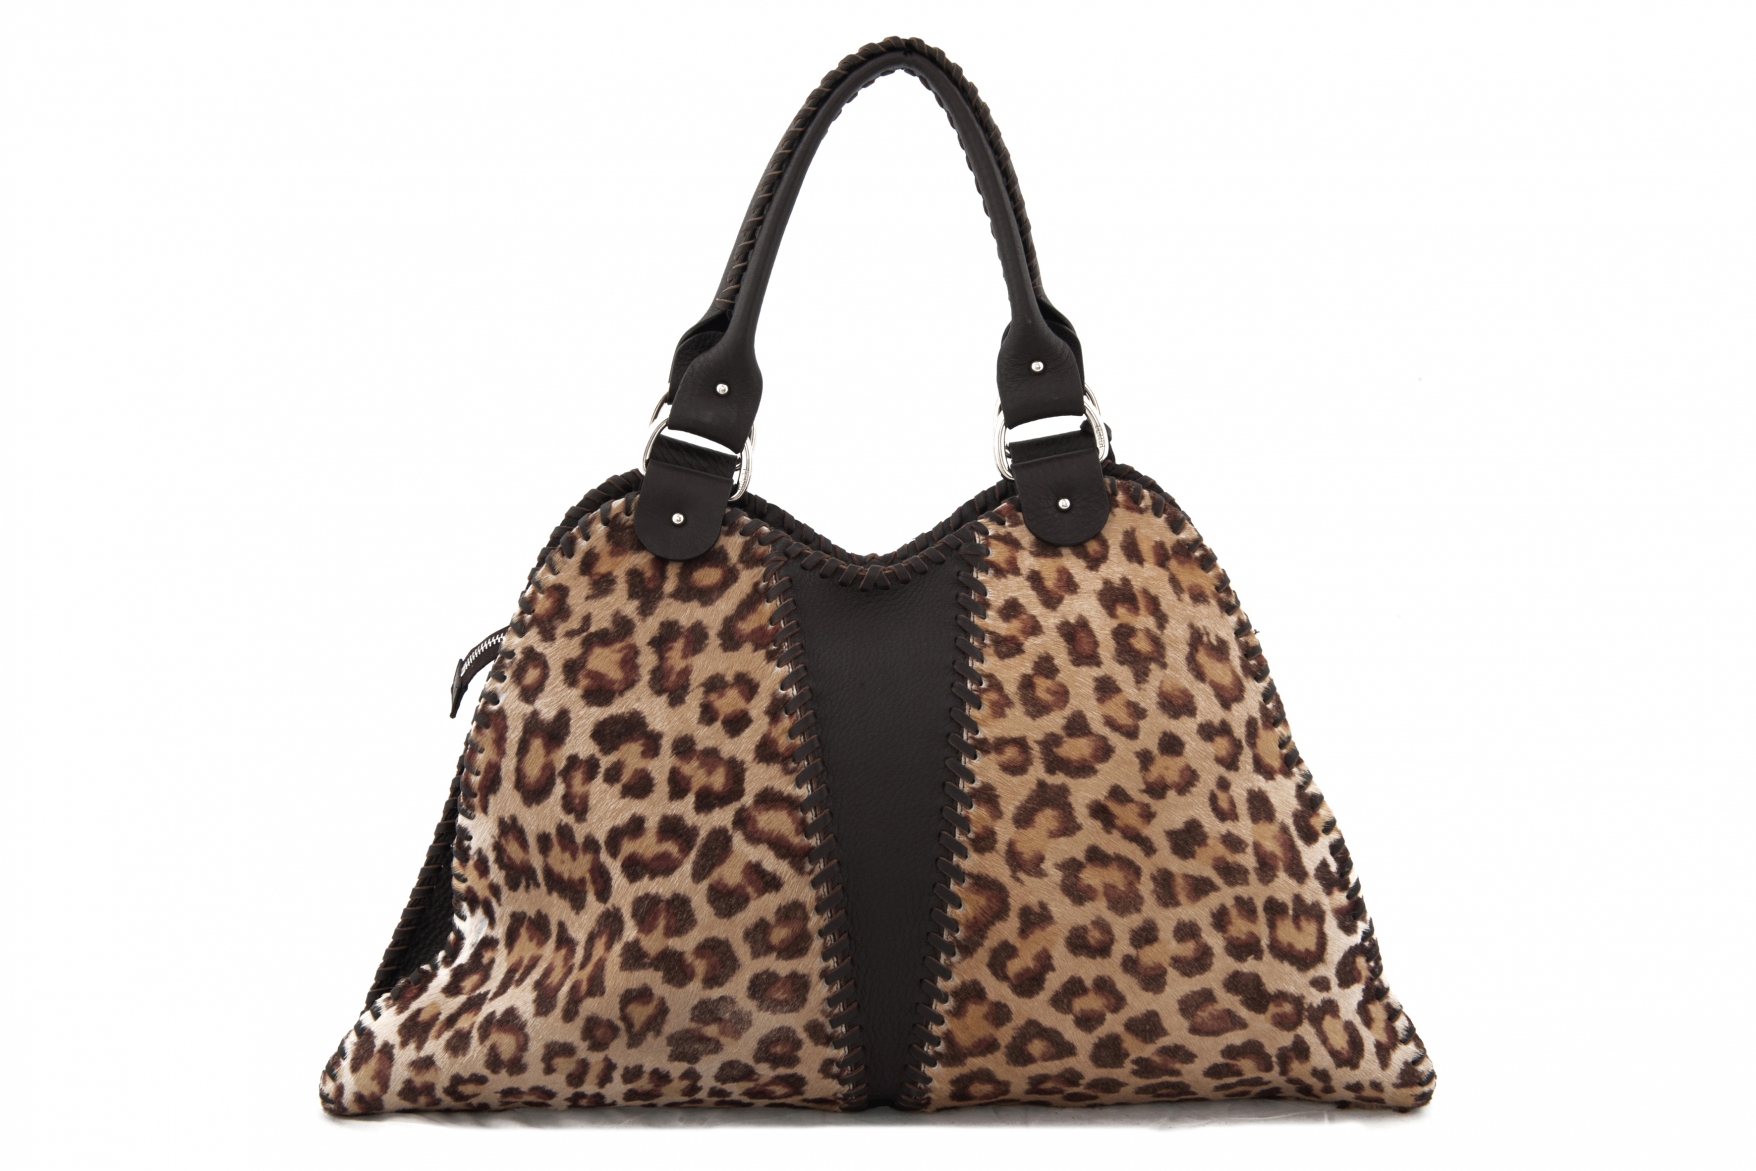 Fendi leather leopard pattern handbag | Vintage Shop in Mykonos